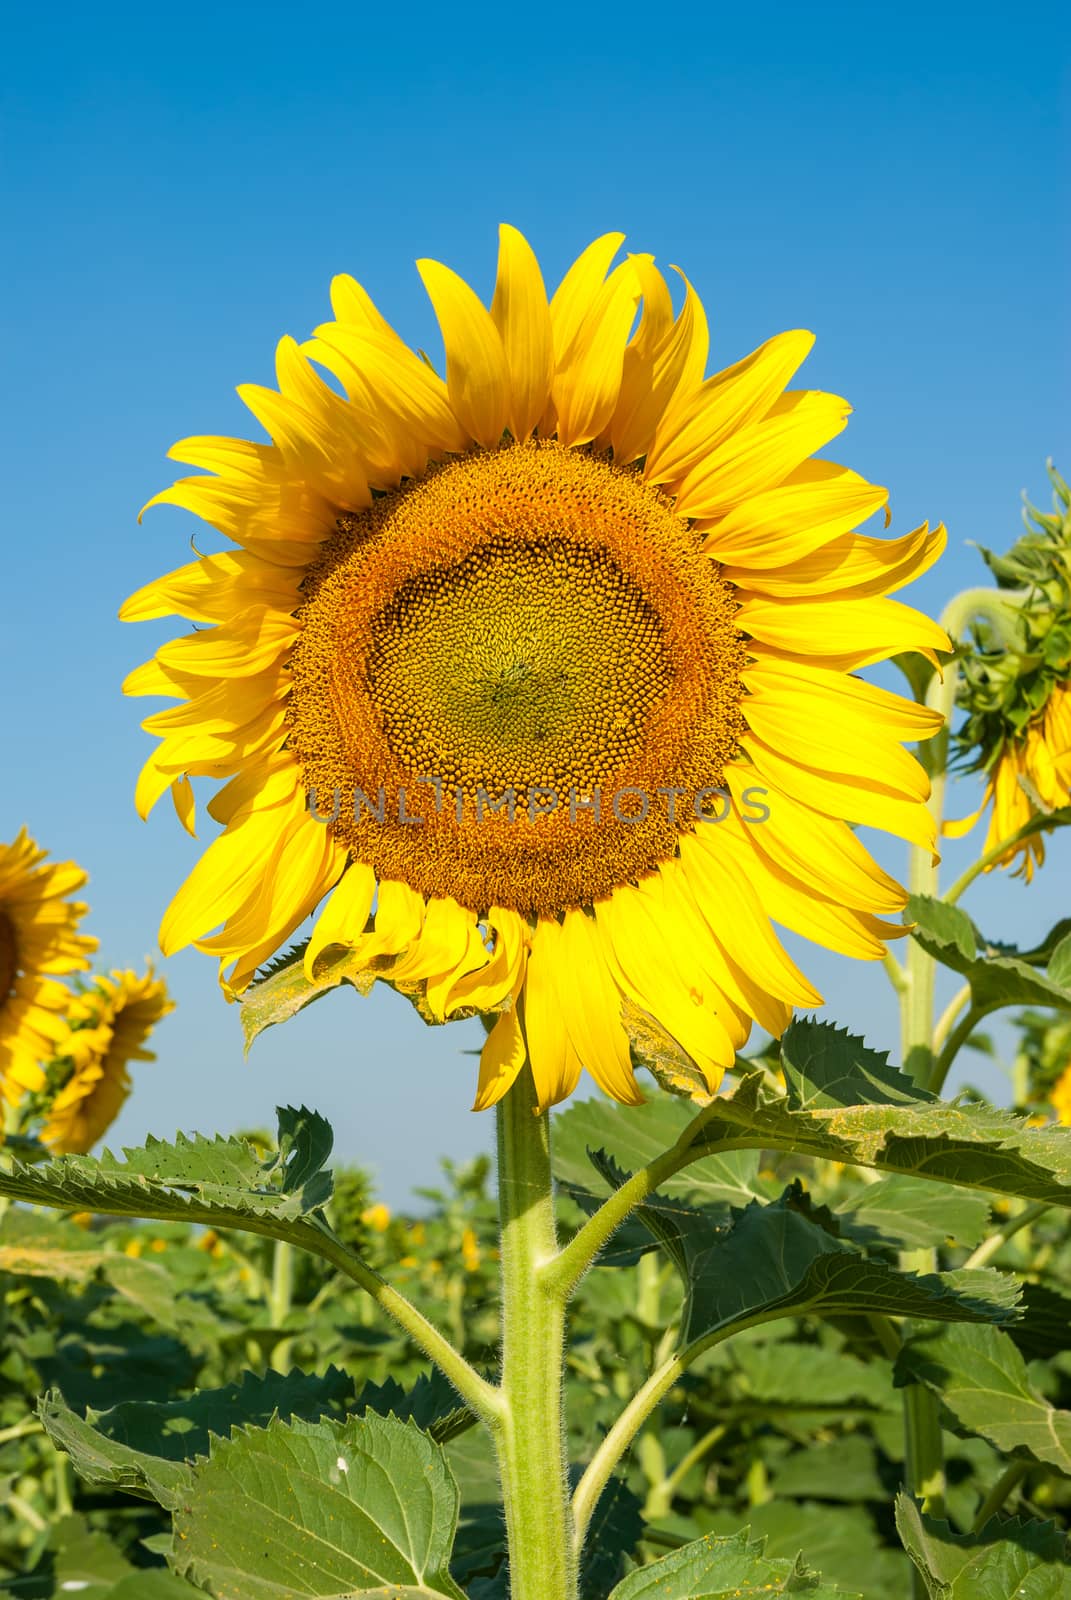 Sunflowers field with blue sky.